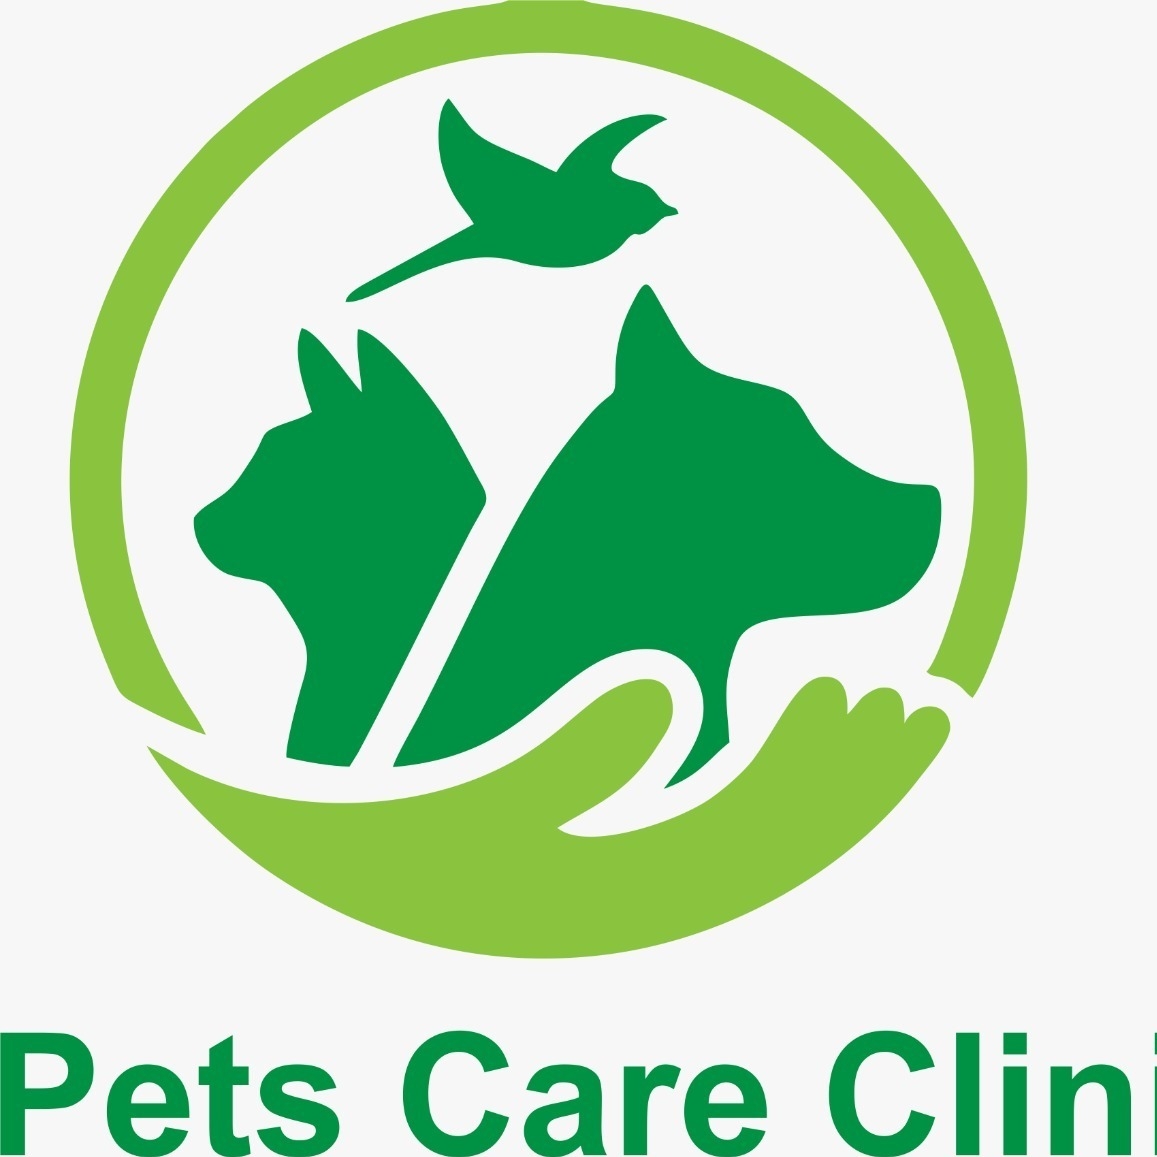 Pets Care Clinic - Logo